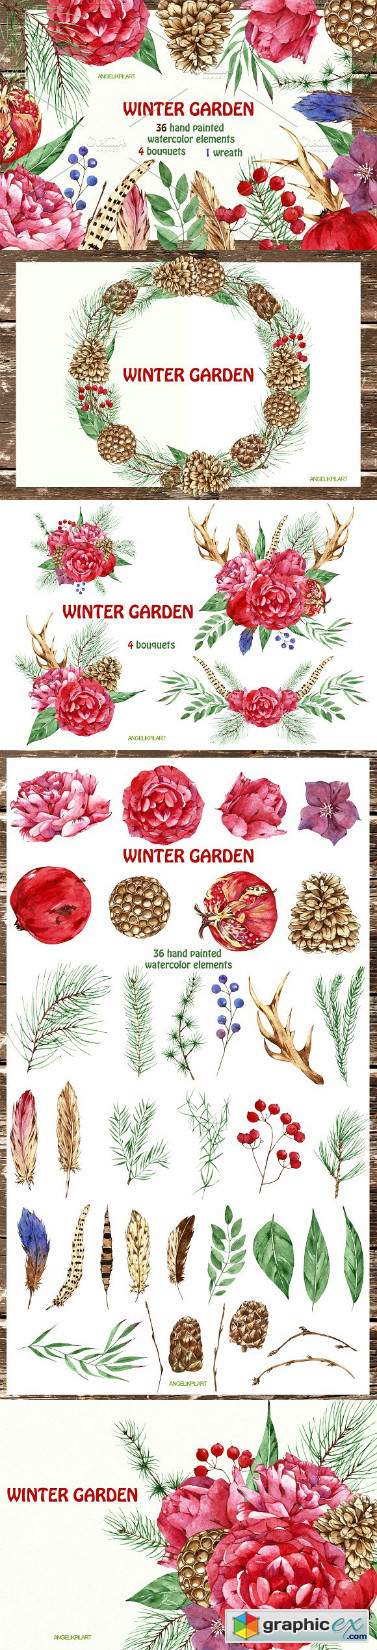 Watercolor set winter garden